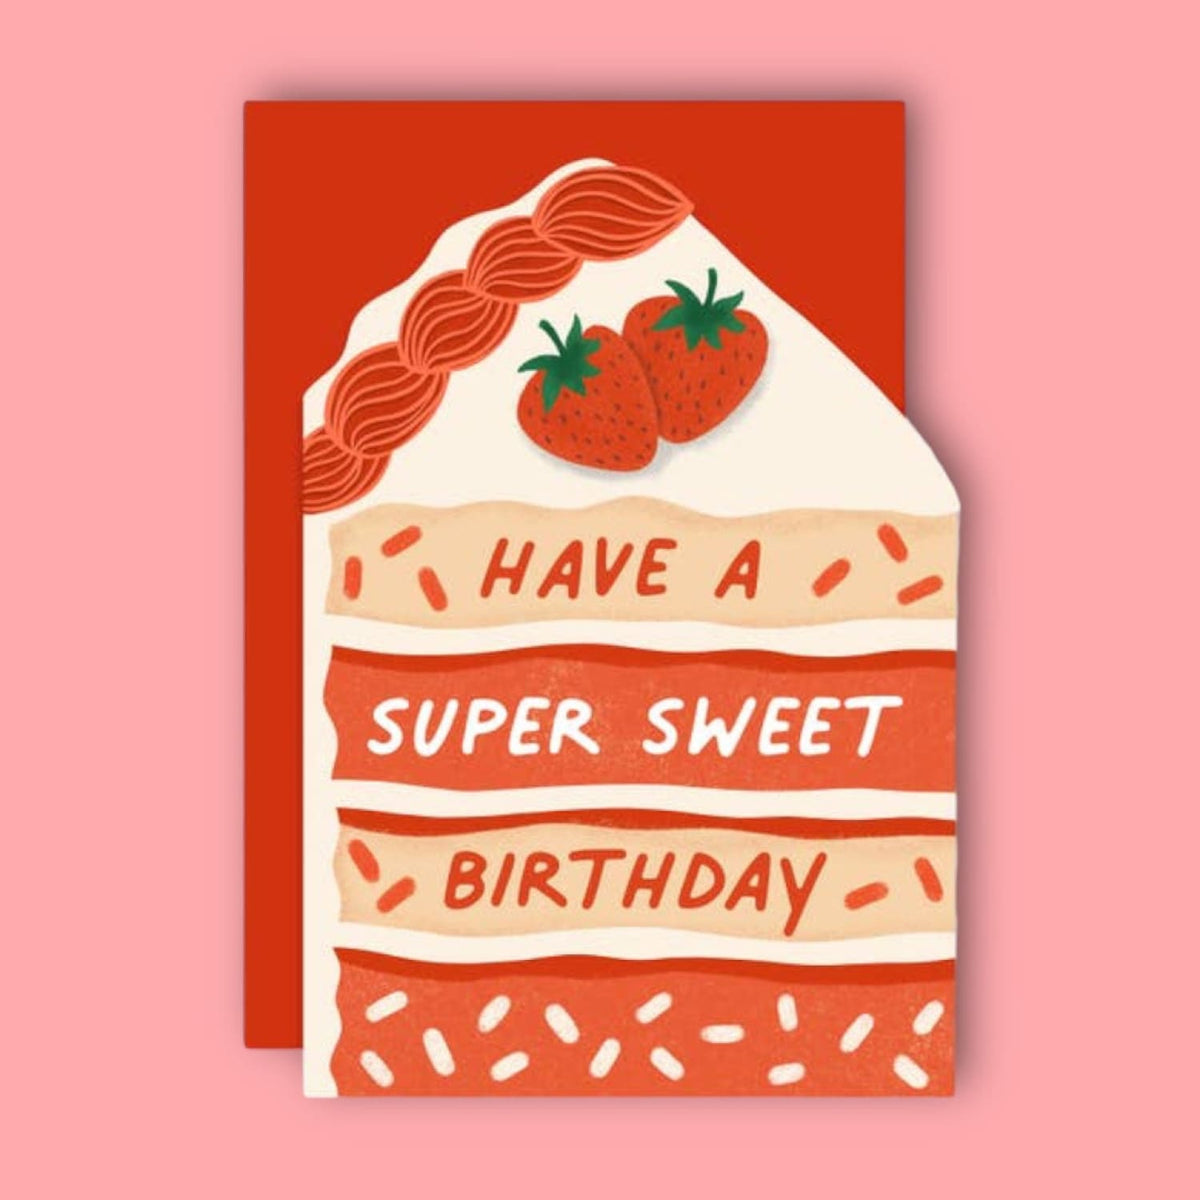 Super Sweet Birthday Cake Greeting Card - Fake Food Newcard